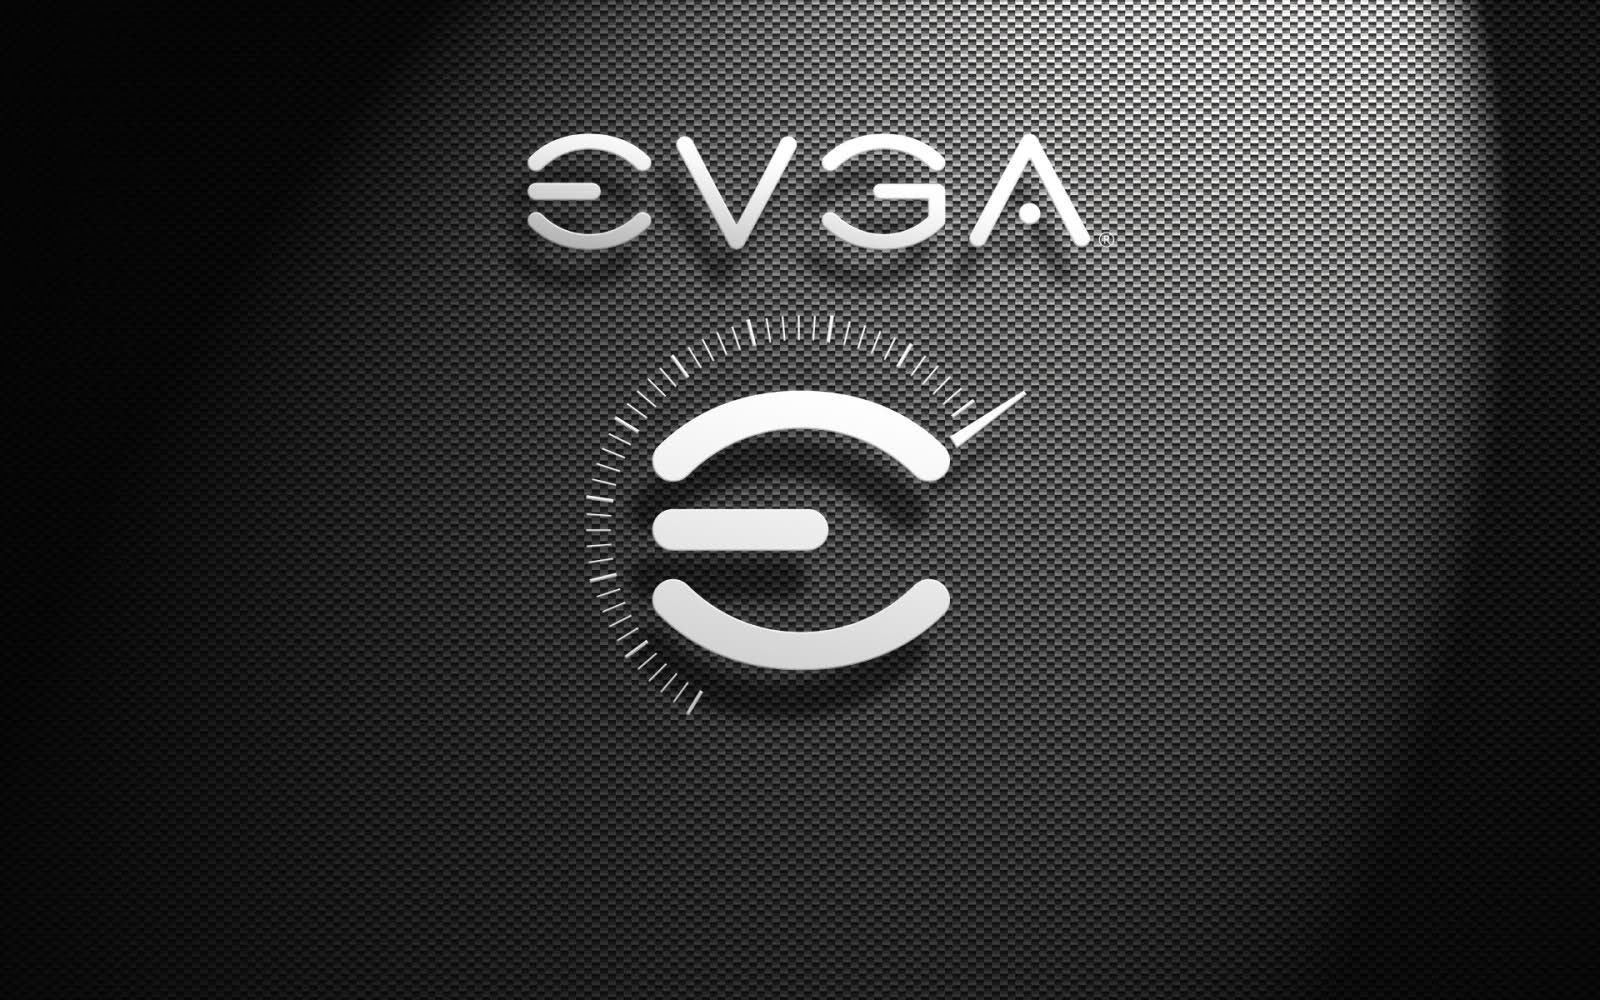 EVGA wallpaper + avatars